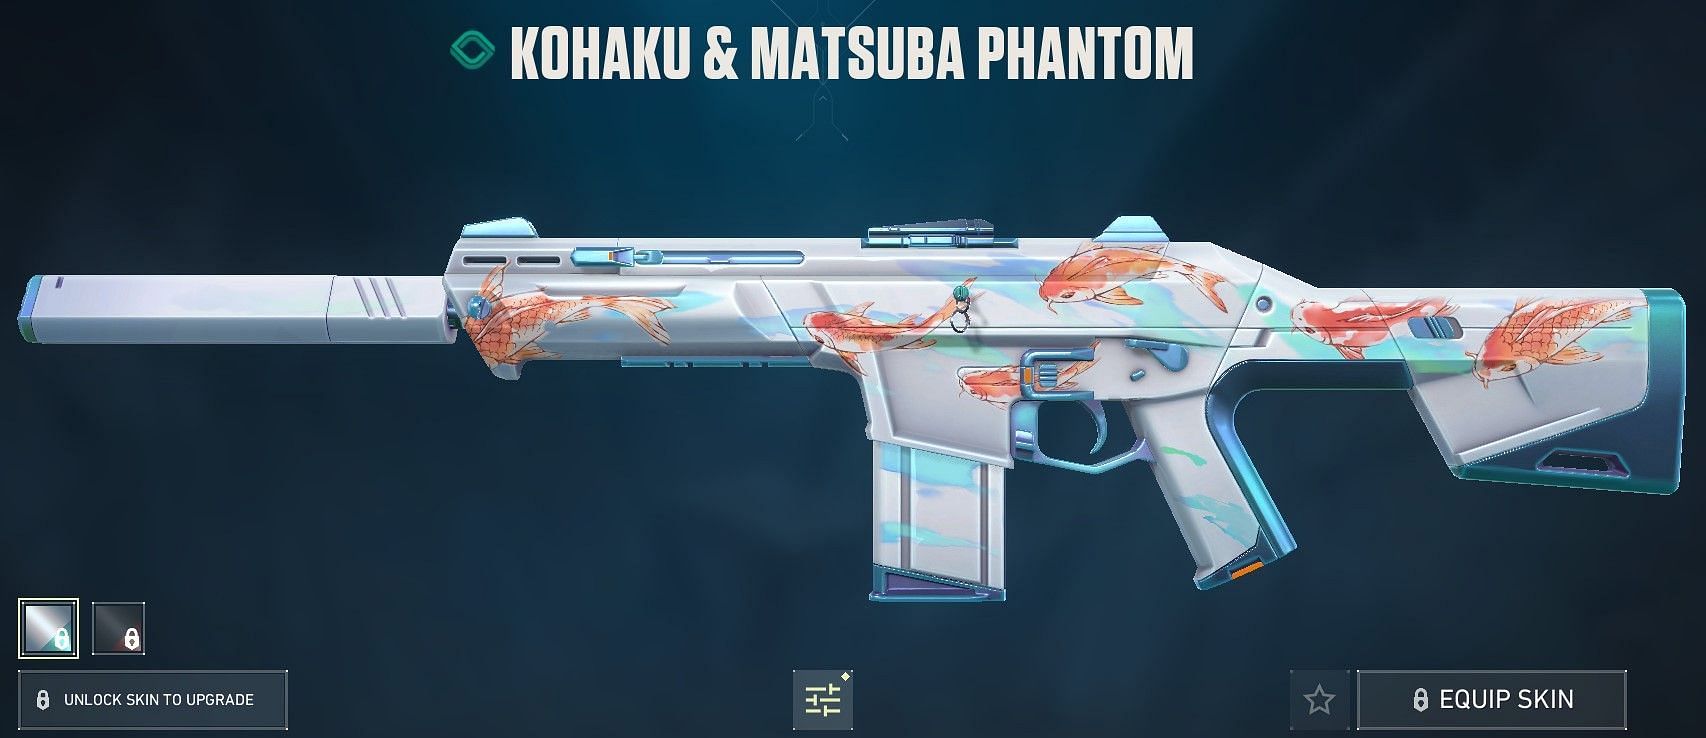 Kohaku &amp; Matsuba Phantom (Image via Riot Games)